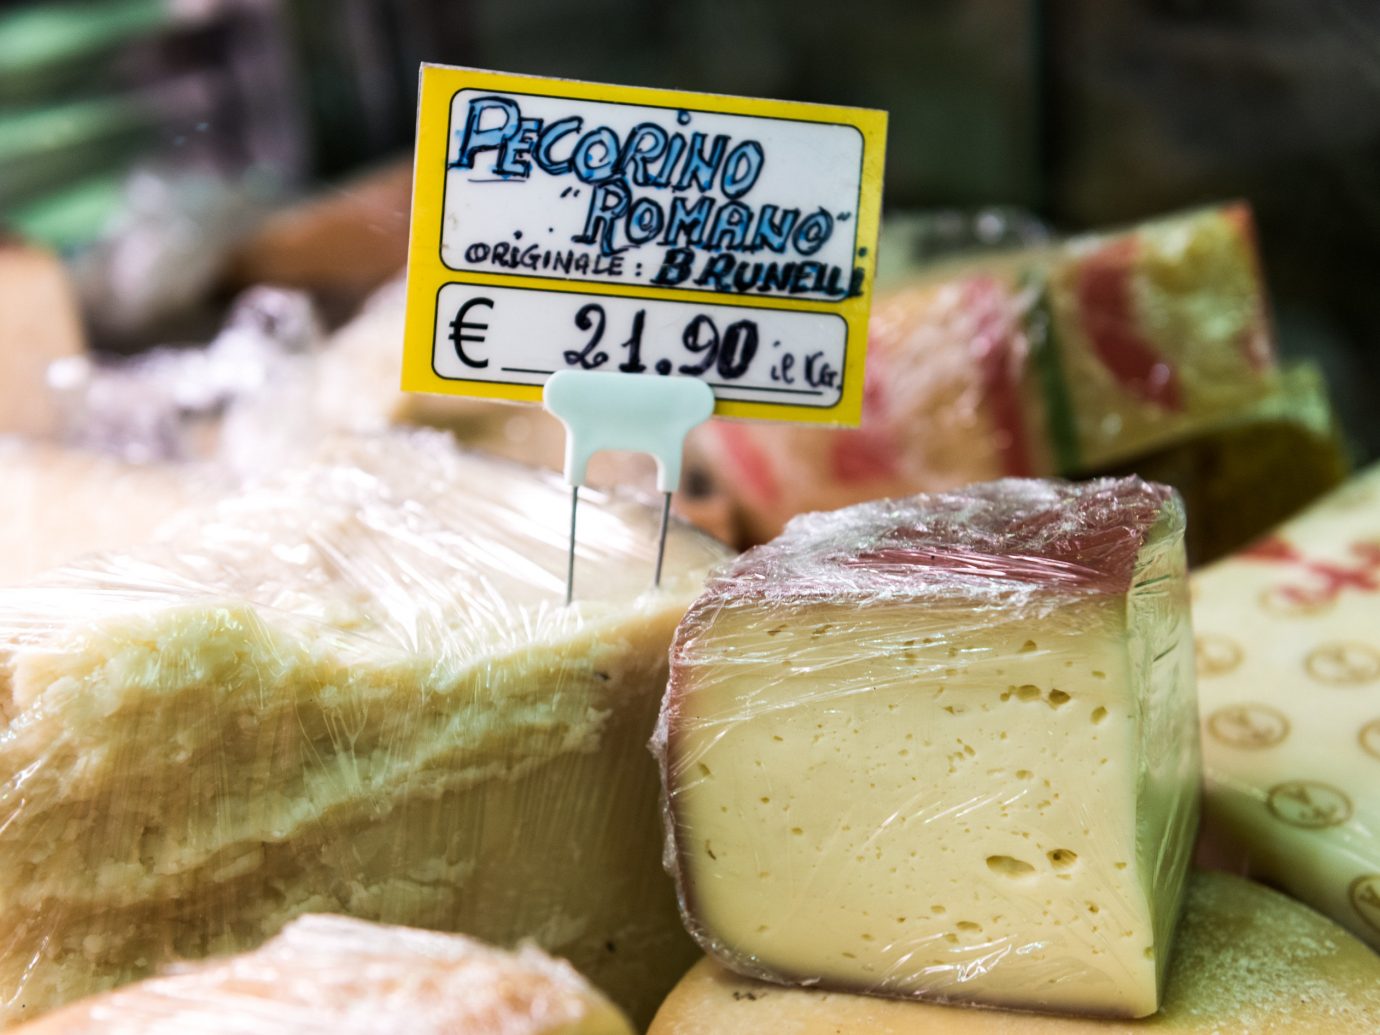 Trip Ideas cheese food sweetness dairy product flavor limburger cheese ingredient vegetable